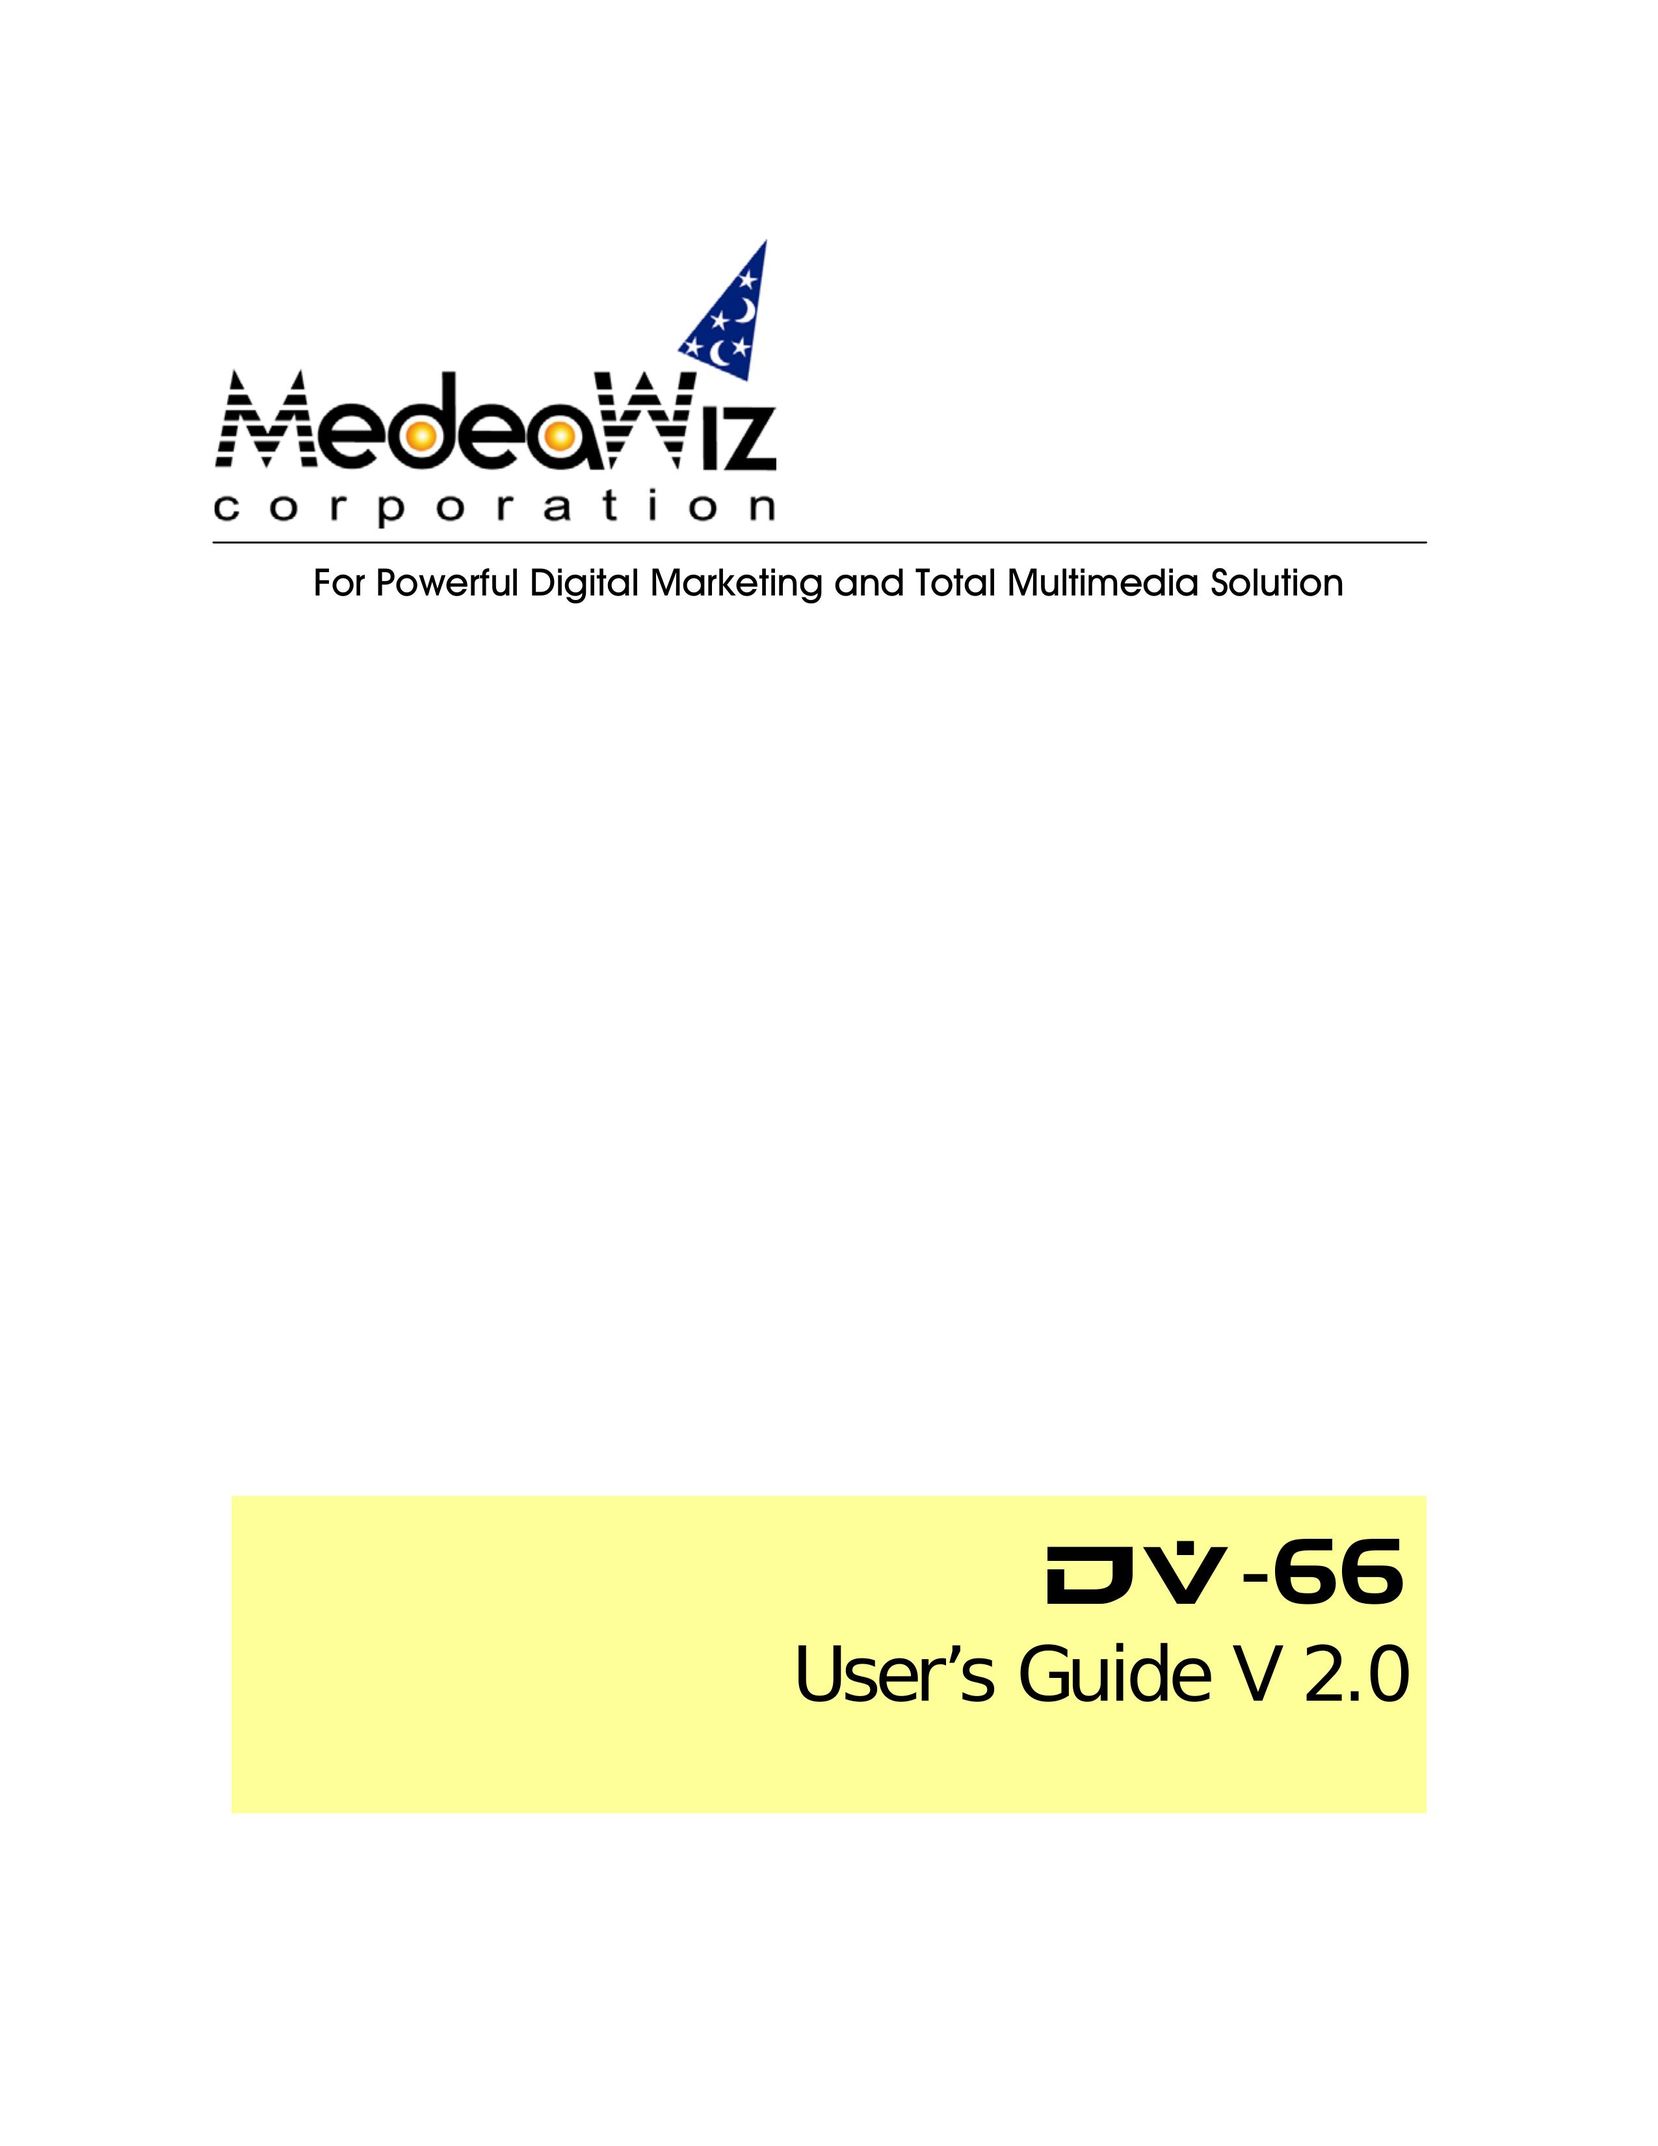 Medea DV-66 DVD Player User Manual